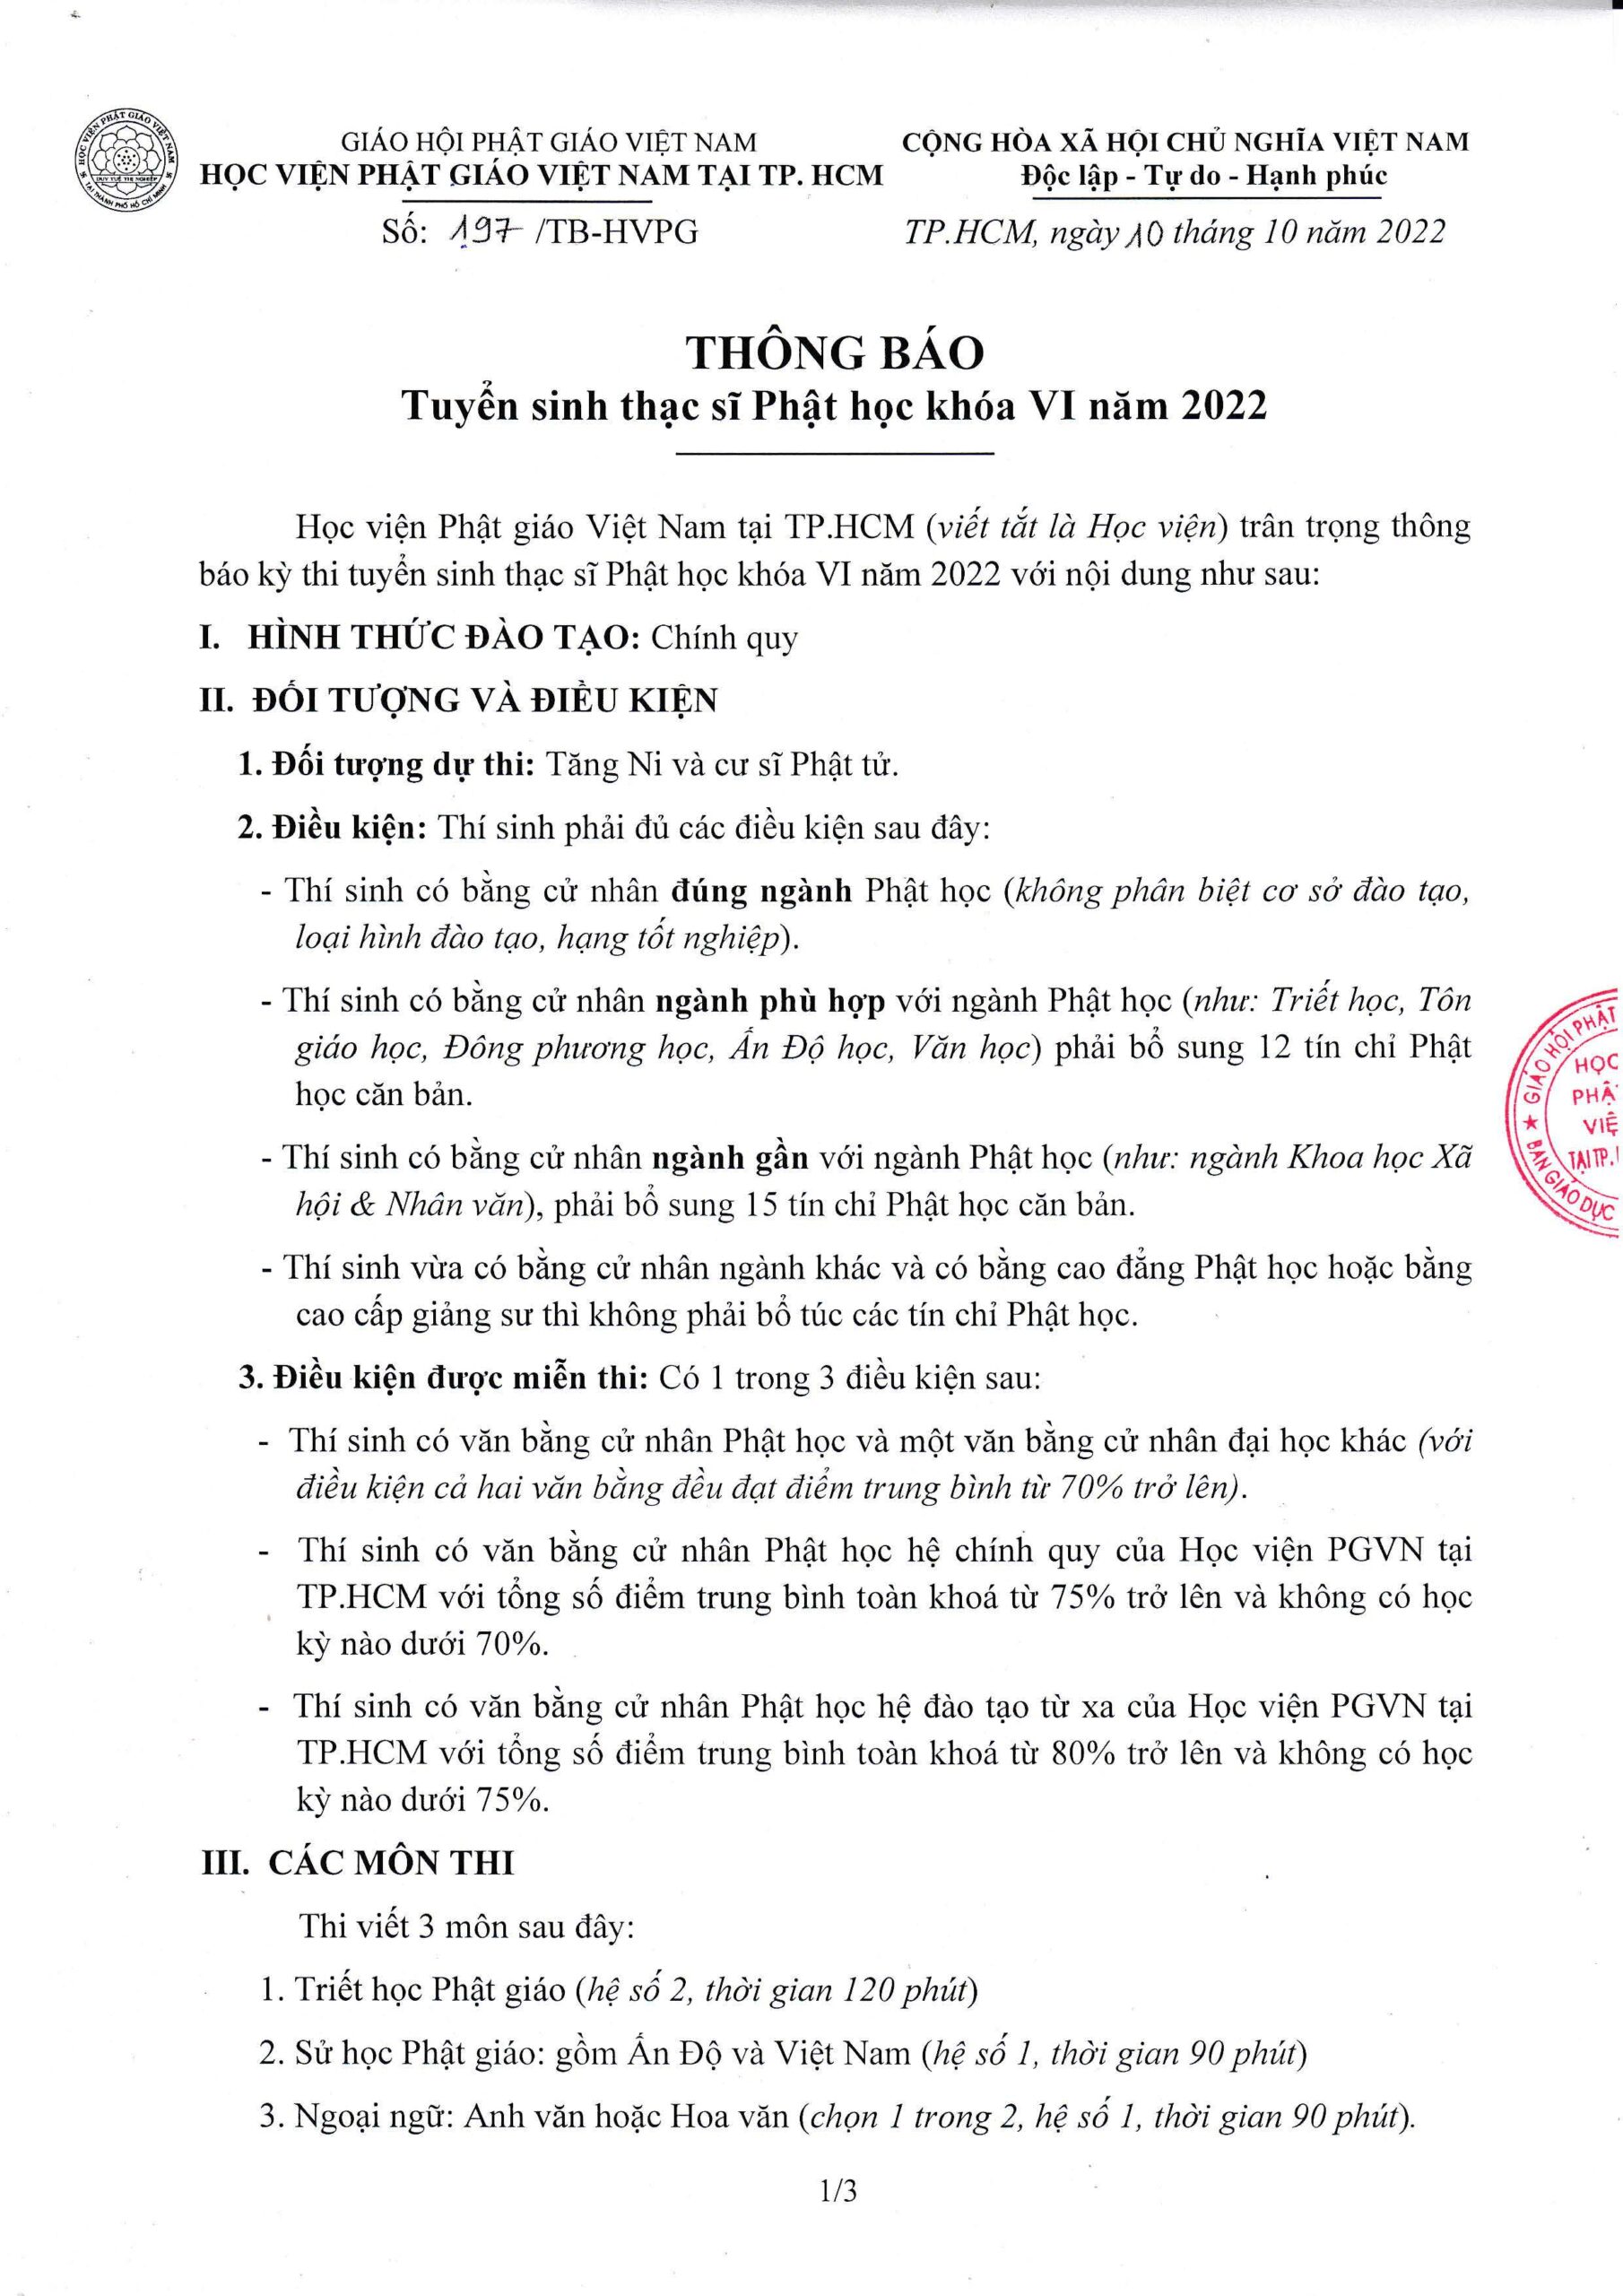 tapchinghiencuuphathoc.vn Thong bao tuyen sinh Thac si HVPGVN tai TpHCM Page 1 scaled